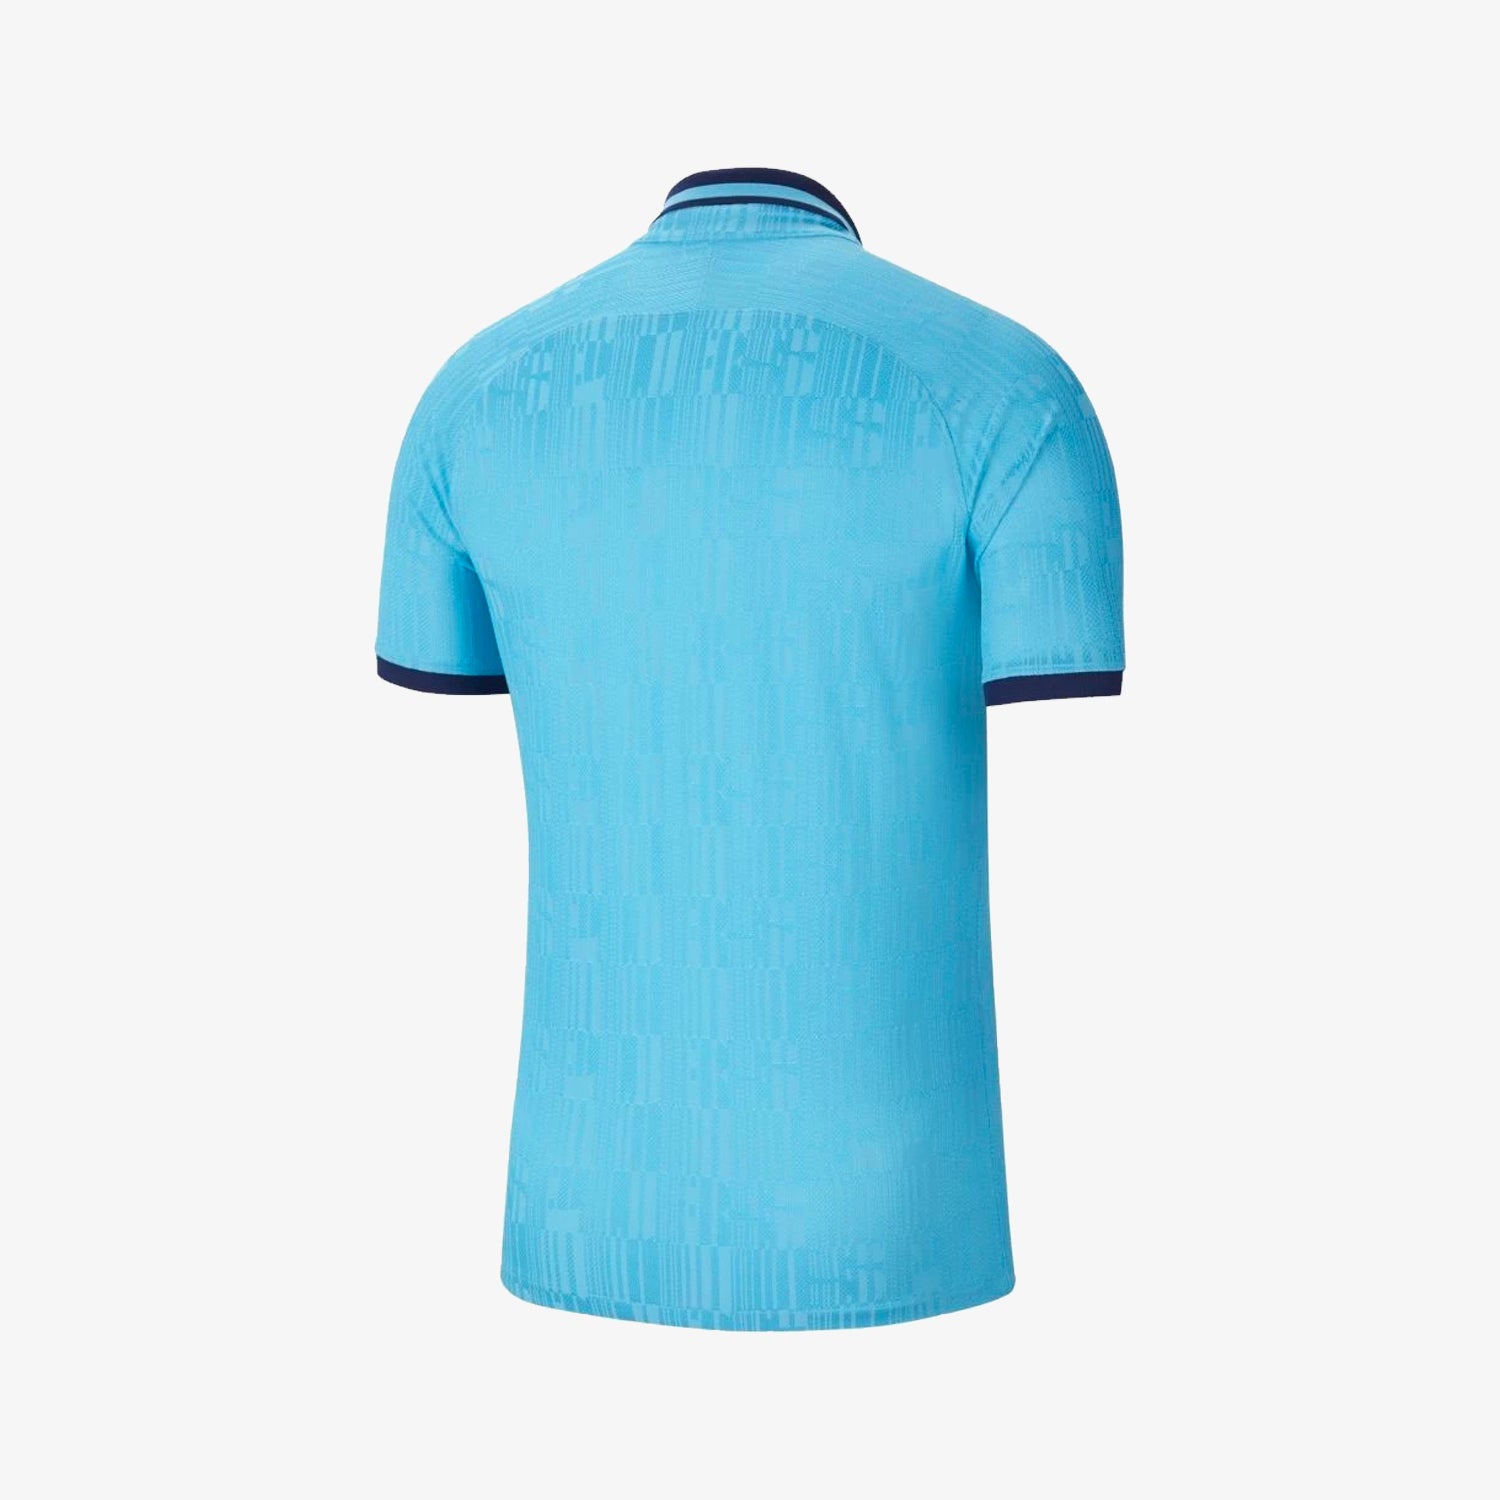 Cheap Tottenham Football Shirts / Soccer Jerseys